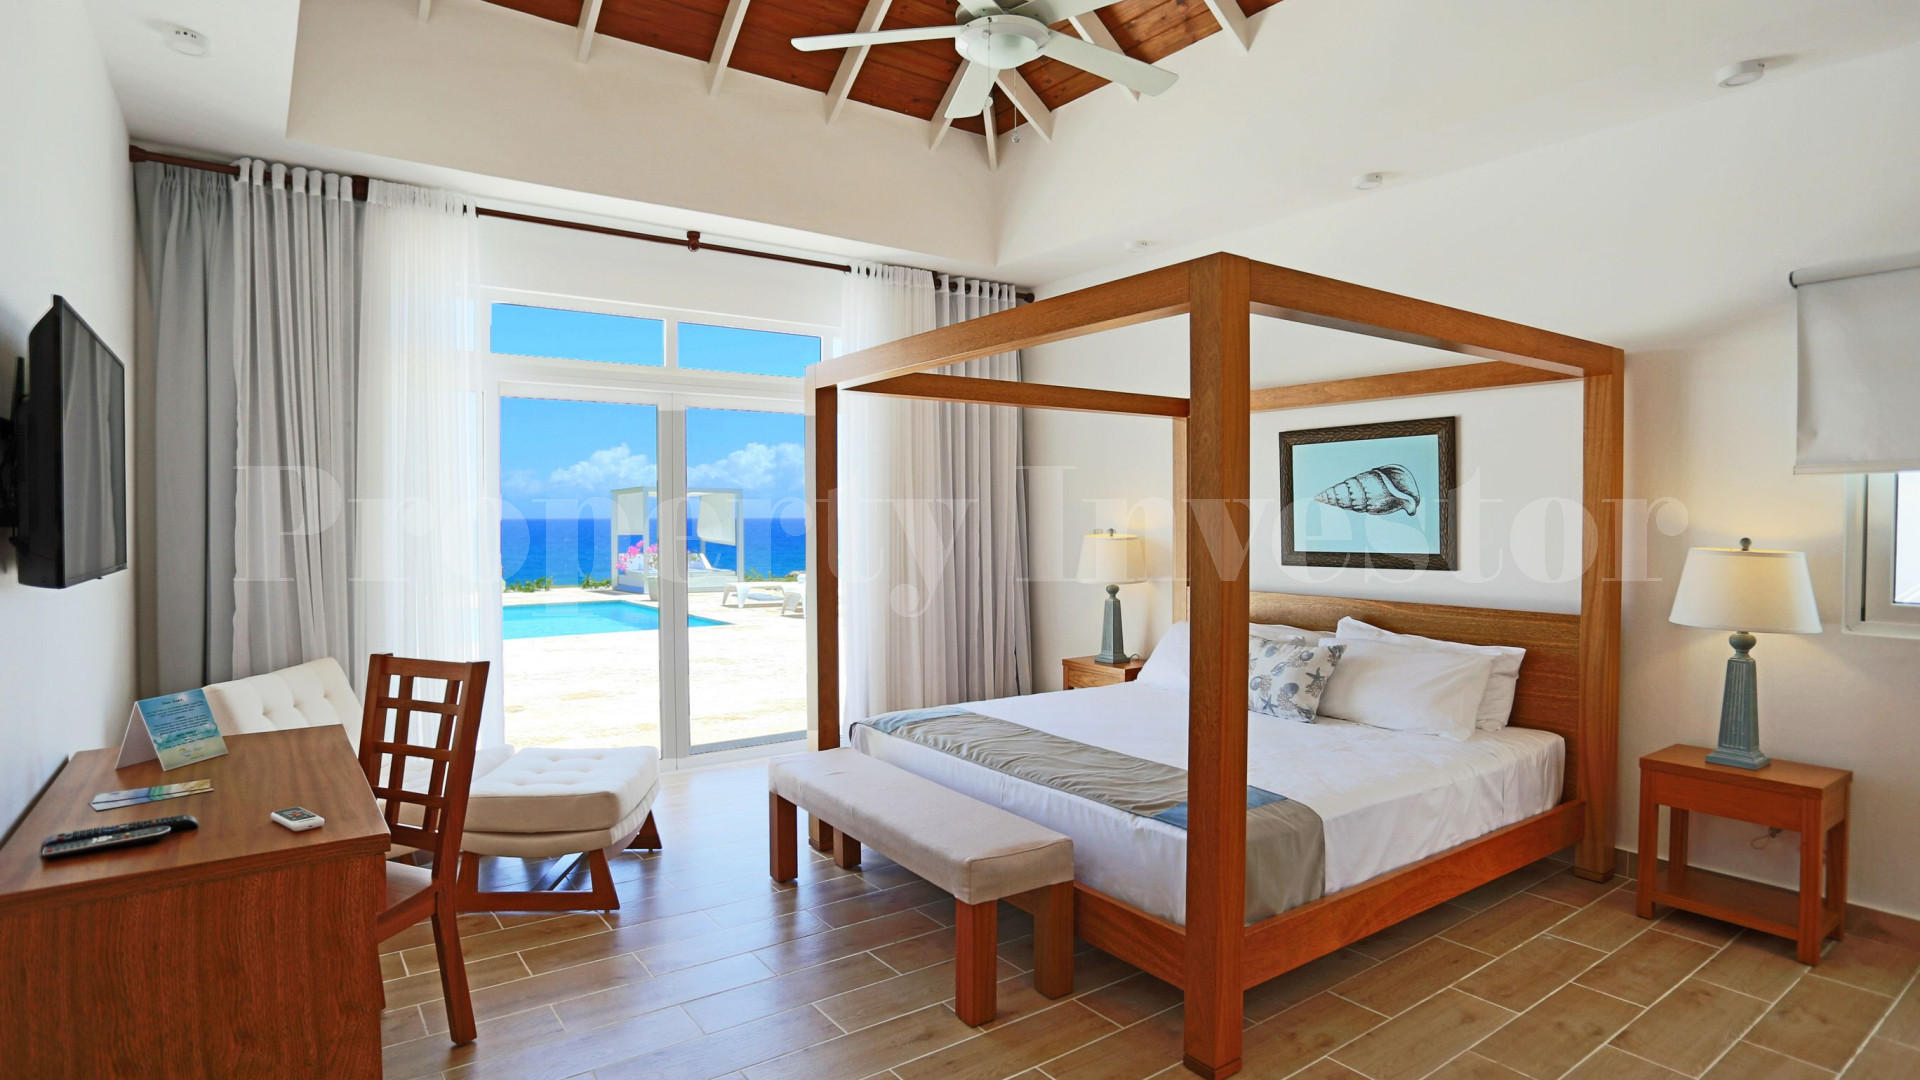 3 Bedroom Oceanfront Villa in the Dominican Republic with 30 Year Financing (Villa 1)